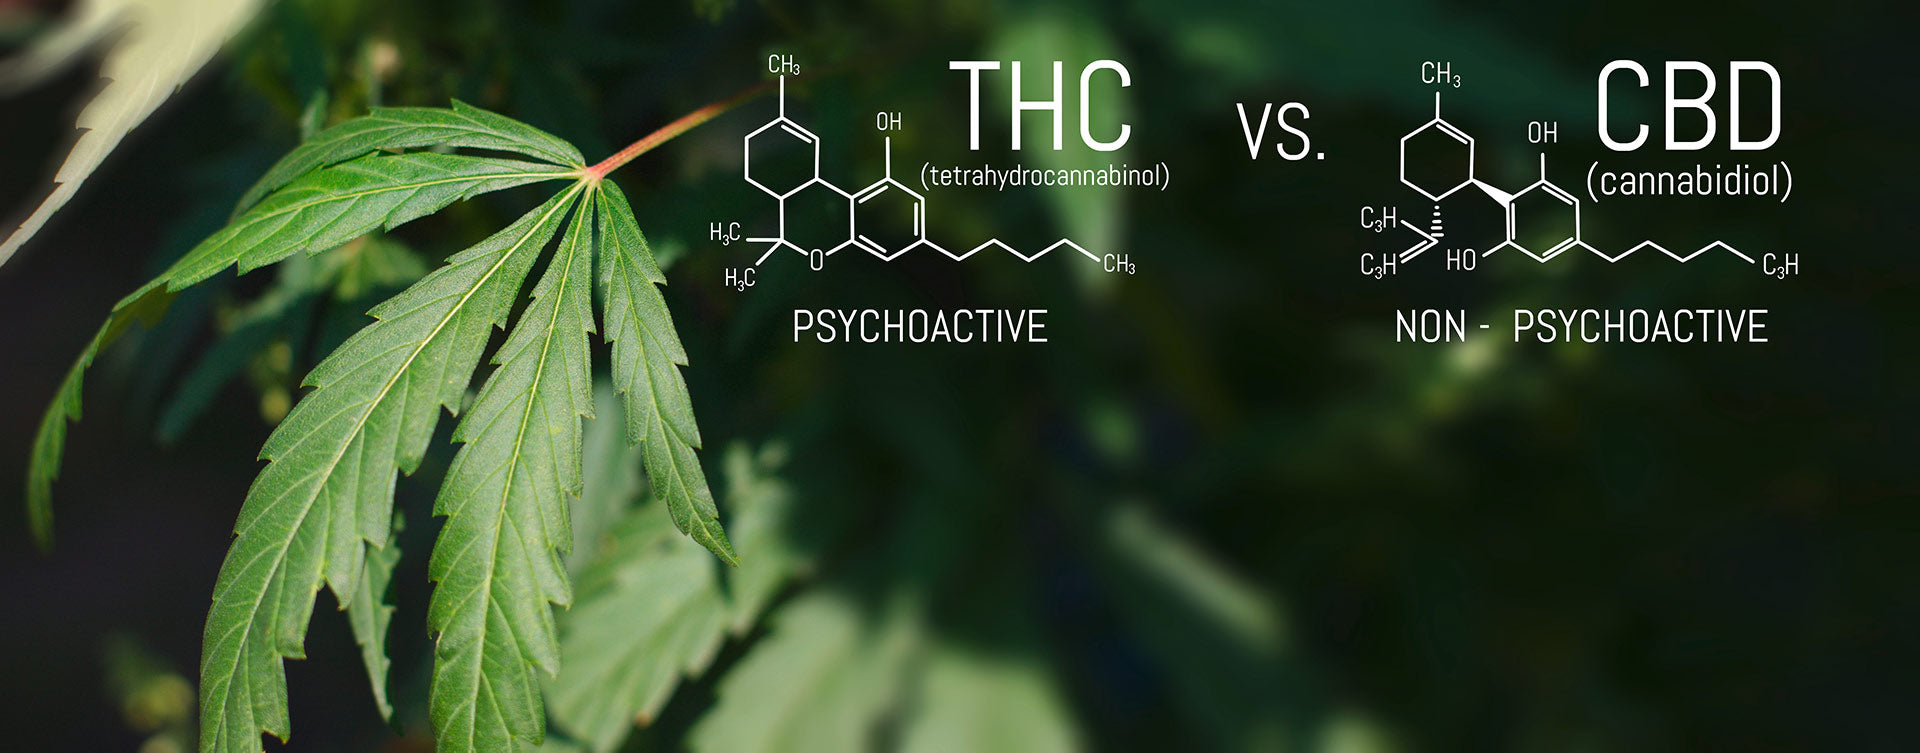 cbd and thc chemical formulas and cannabis leaf